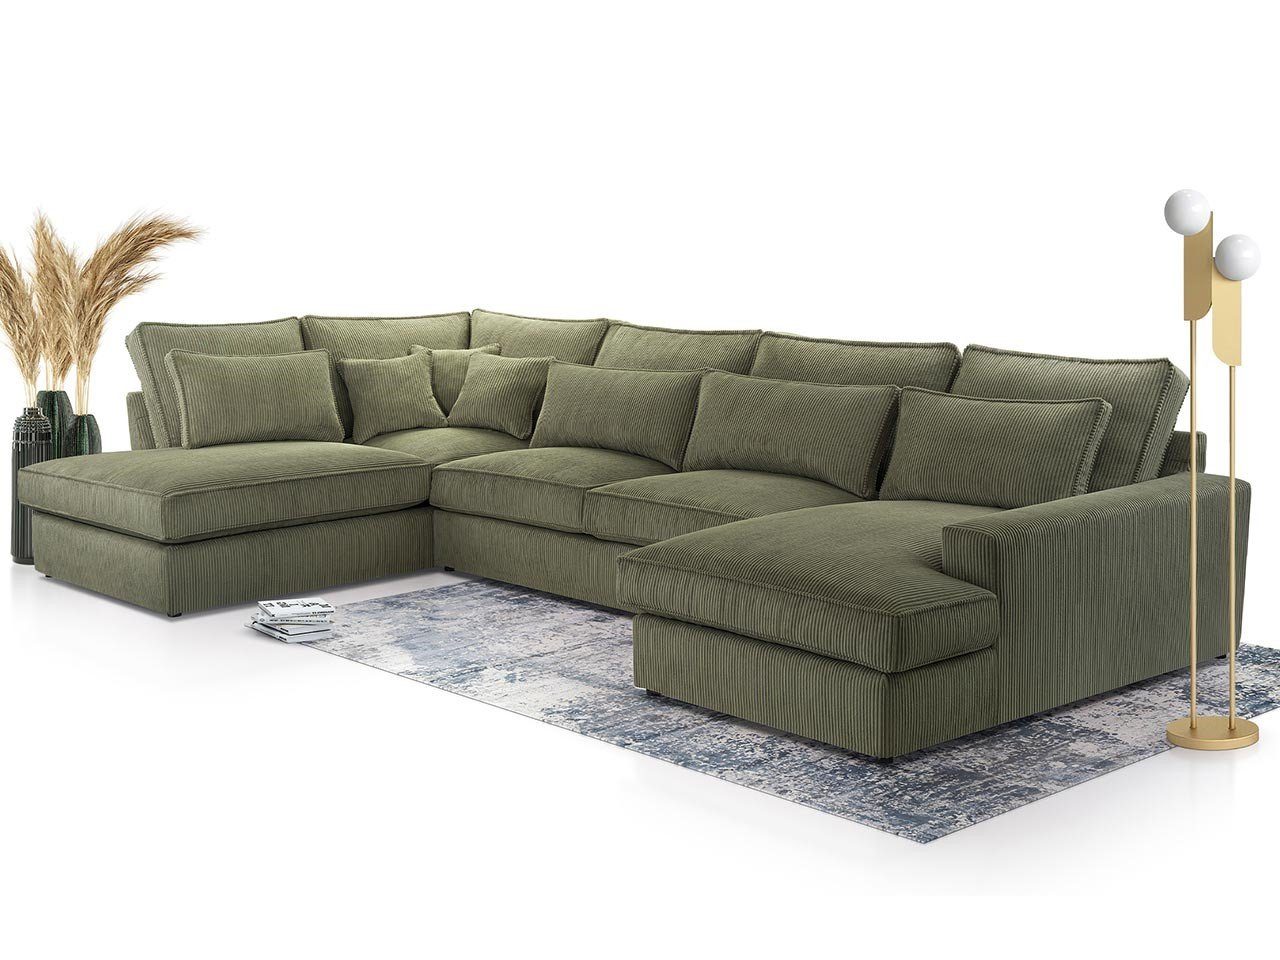 MKS MÖBEL Ecksofa CANES U, U - Form Couch, lose Kissen, modern Design Grün Lincoln